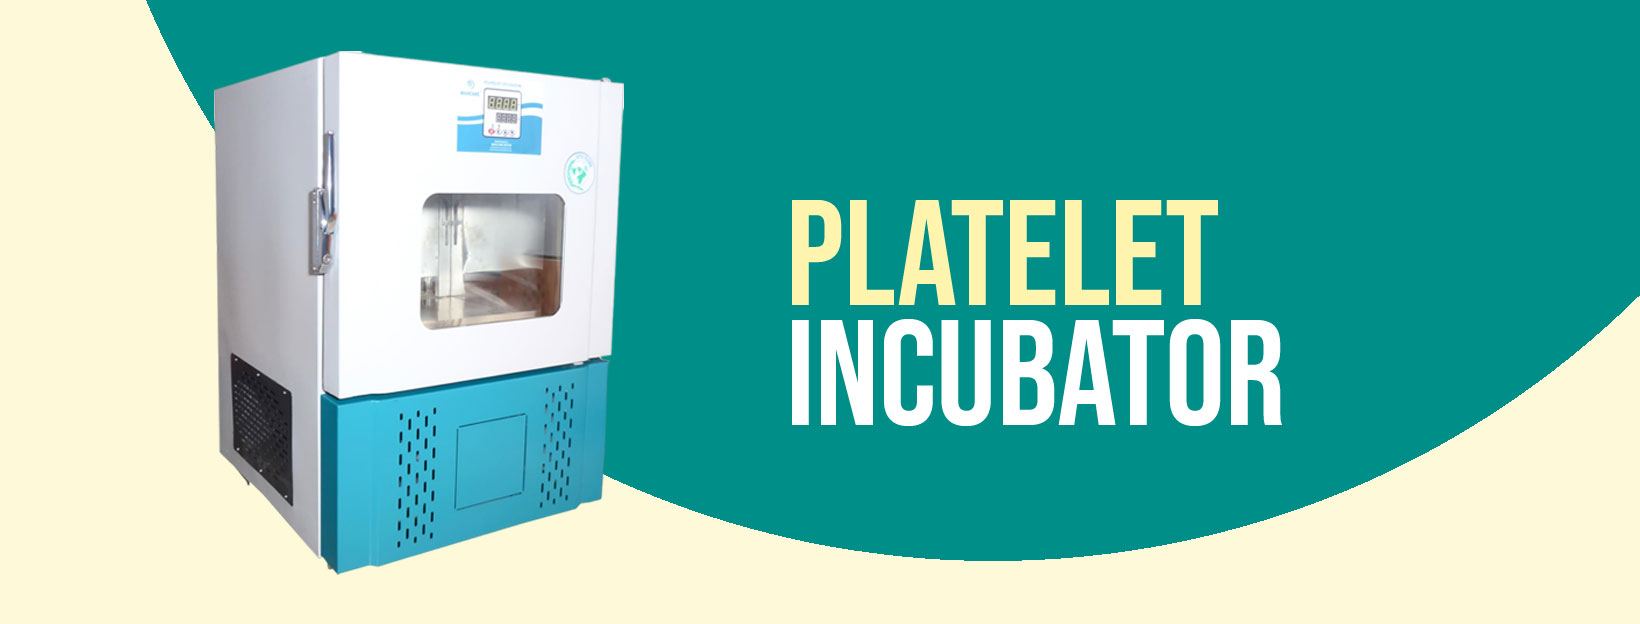 Platelet Incubator